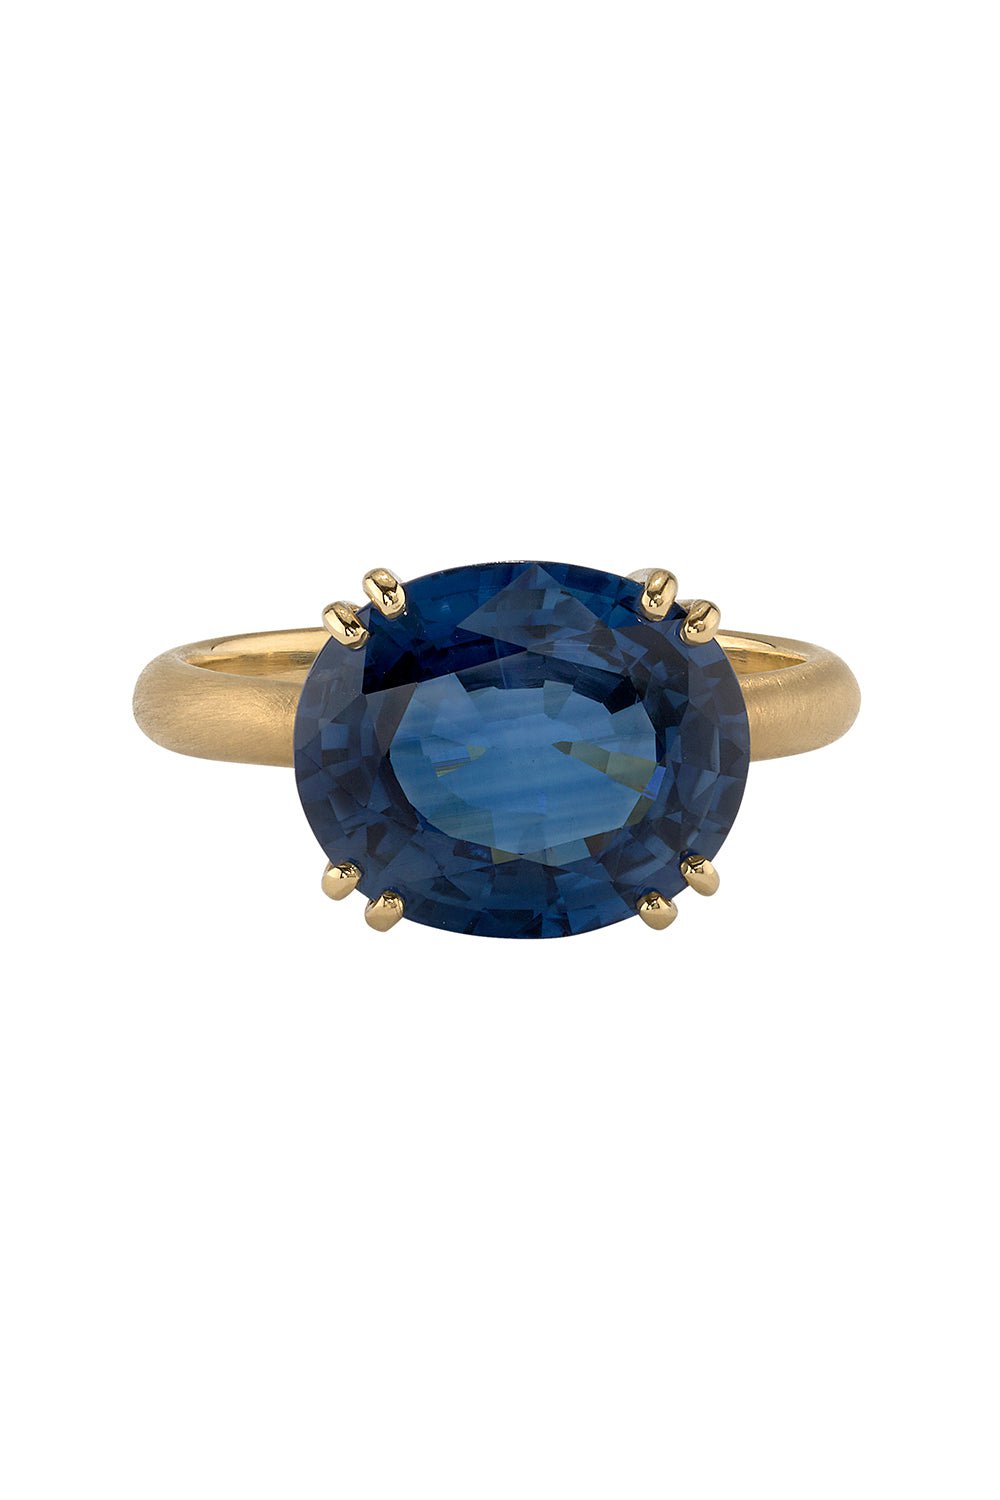 IRENE NEUWIRTH JEWELRY-Gemmy Gem Double Prong Sapphire Ring-YELLOW GOLD